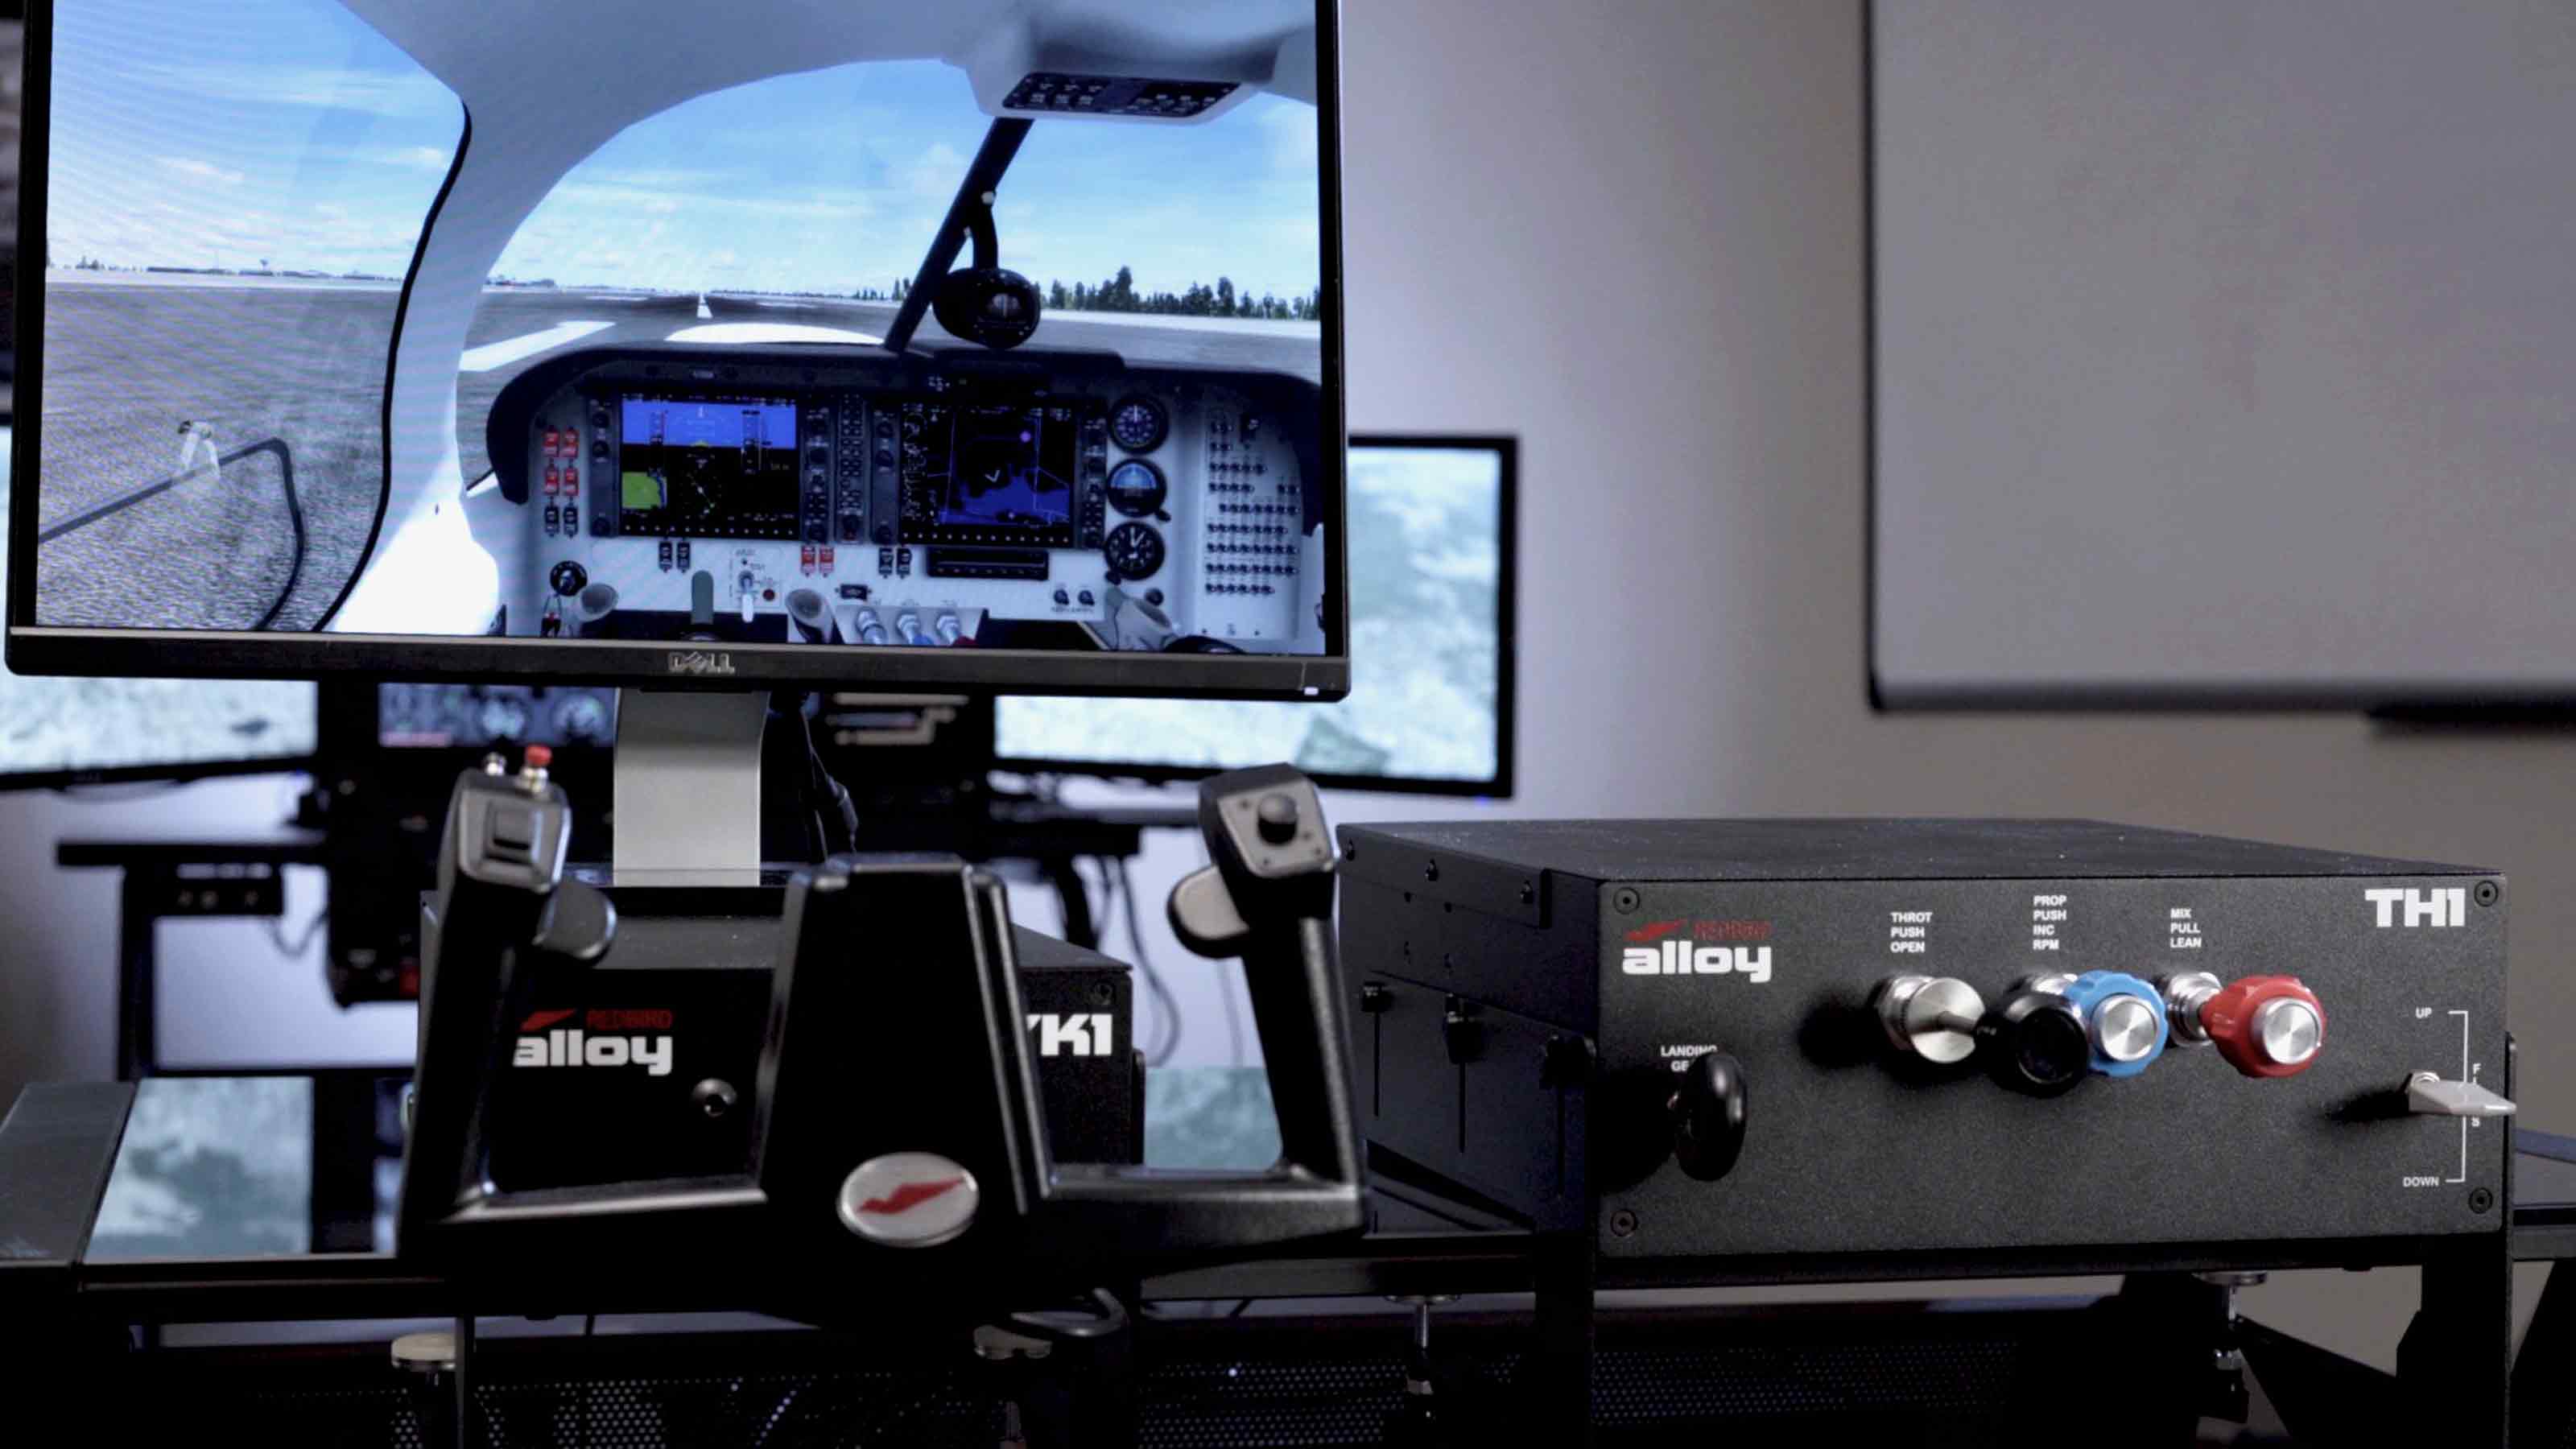 flight simulator pc controls